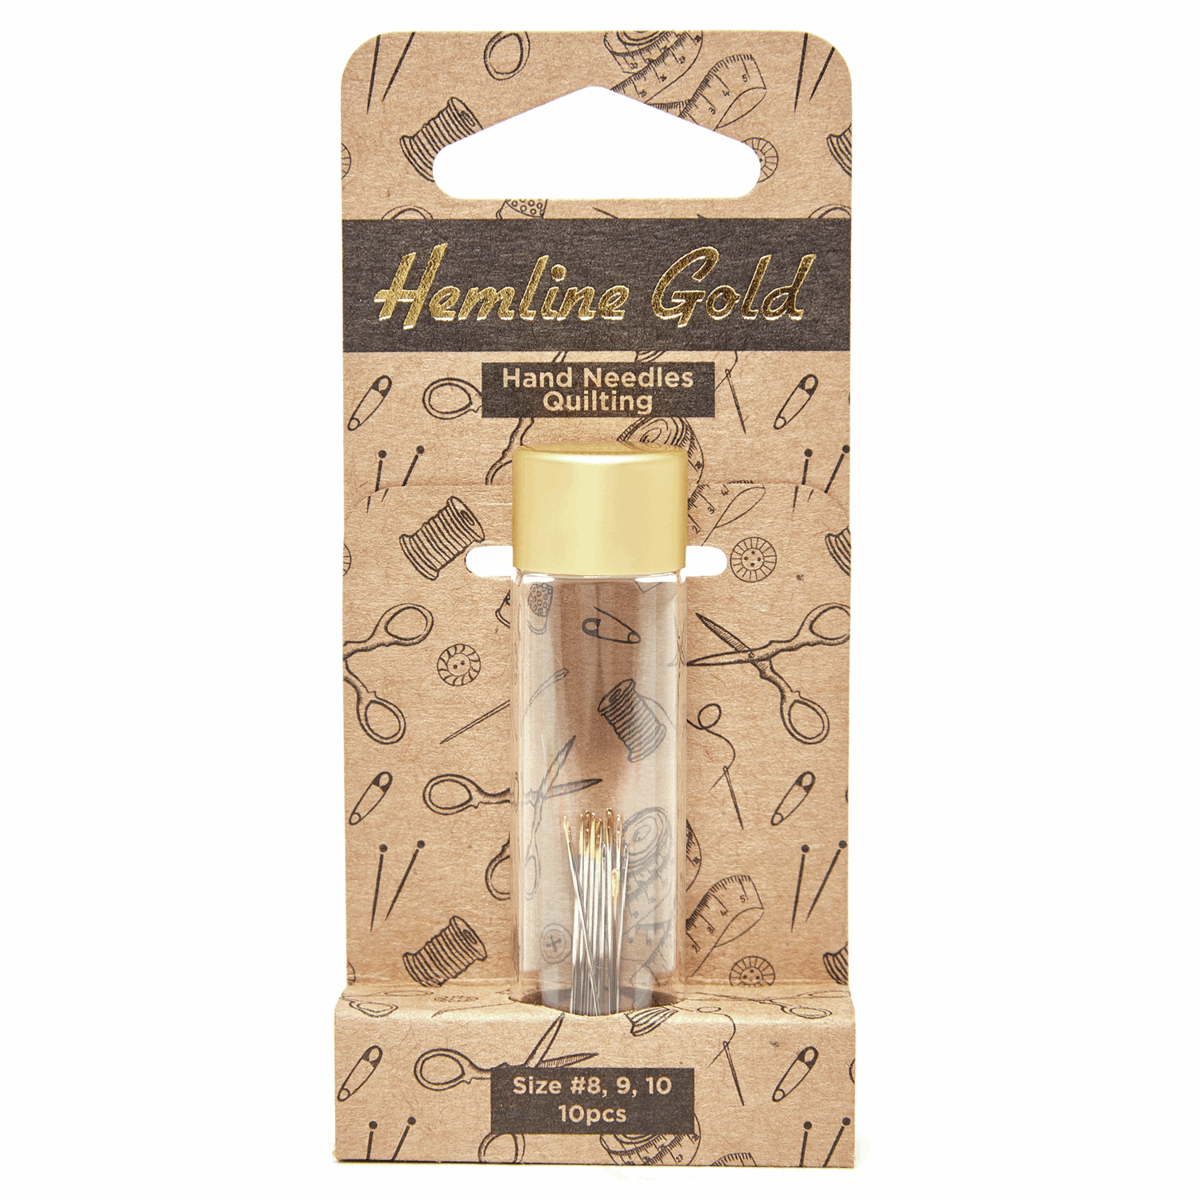 Hemline Gold Hand Sewing Needles - Premium - Quilting - Sizes 8-10